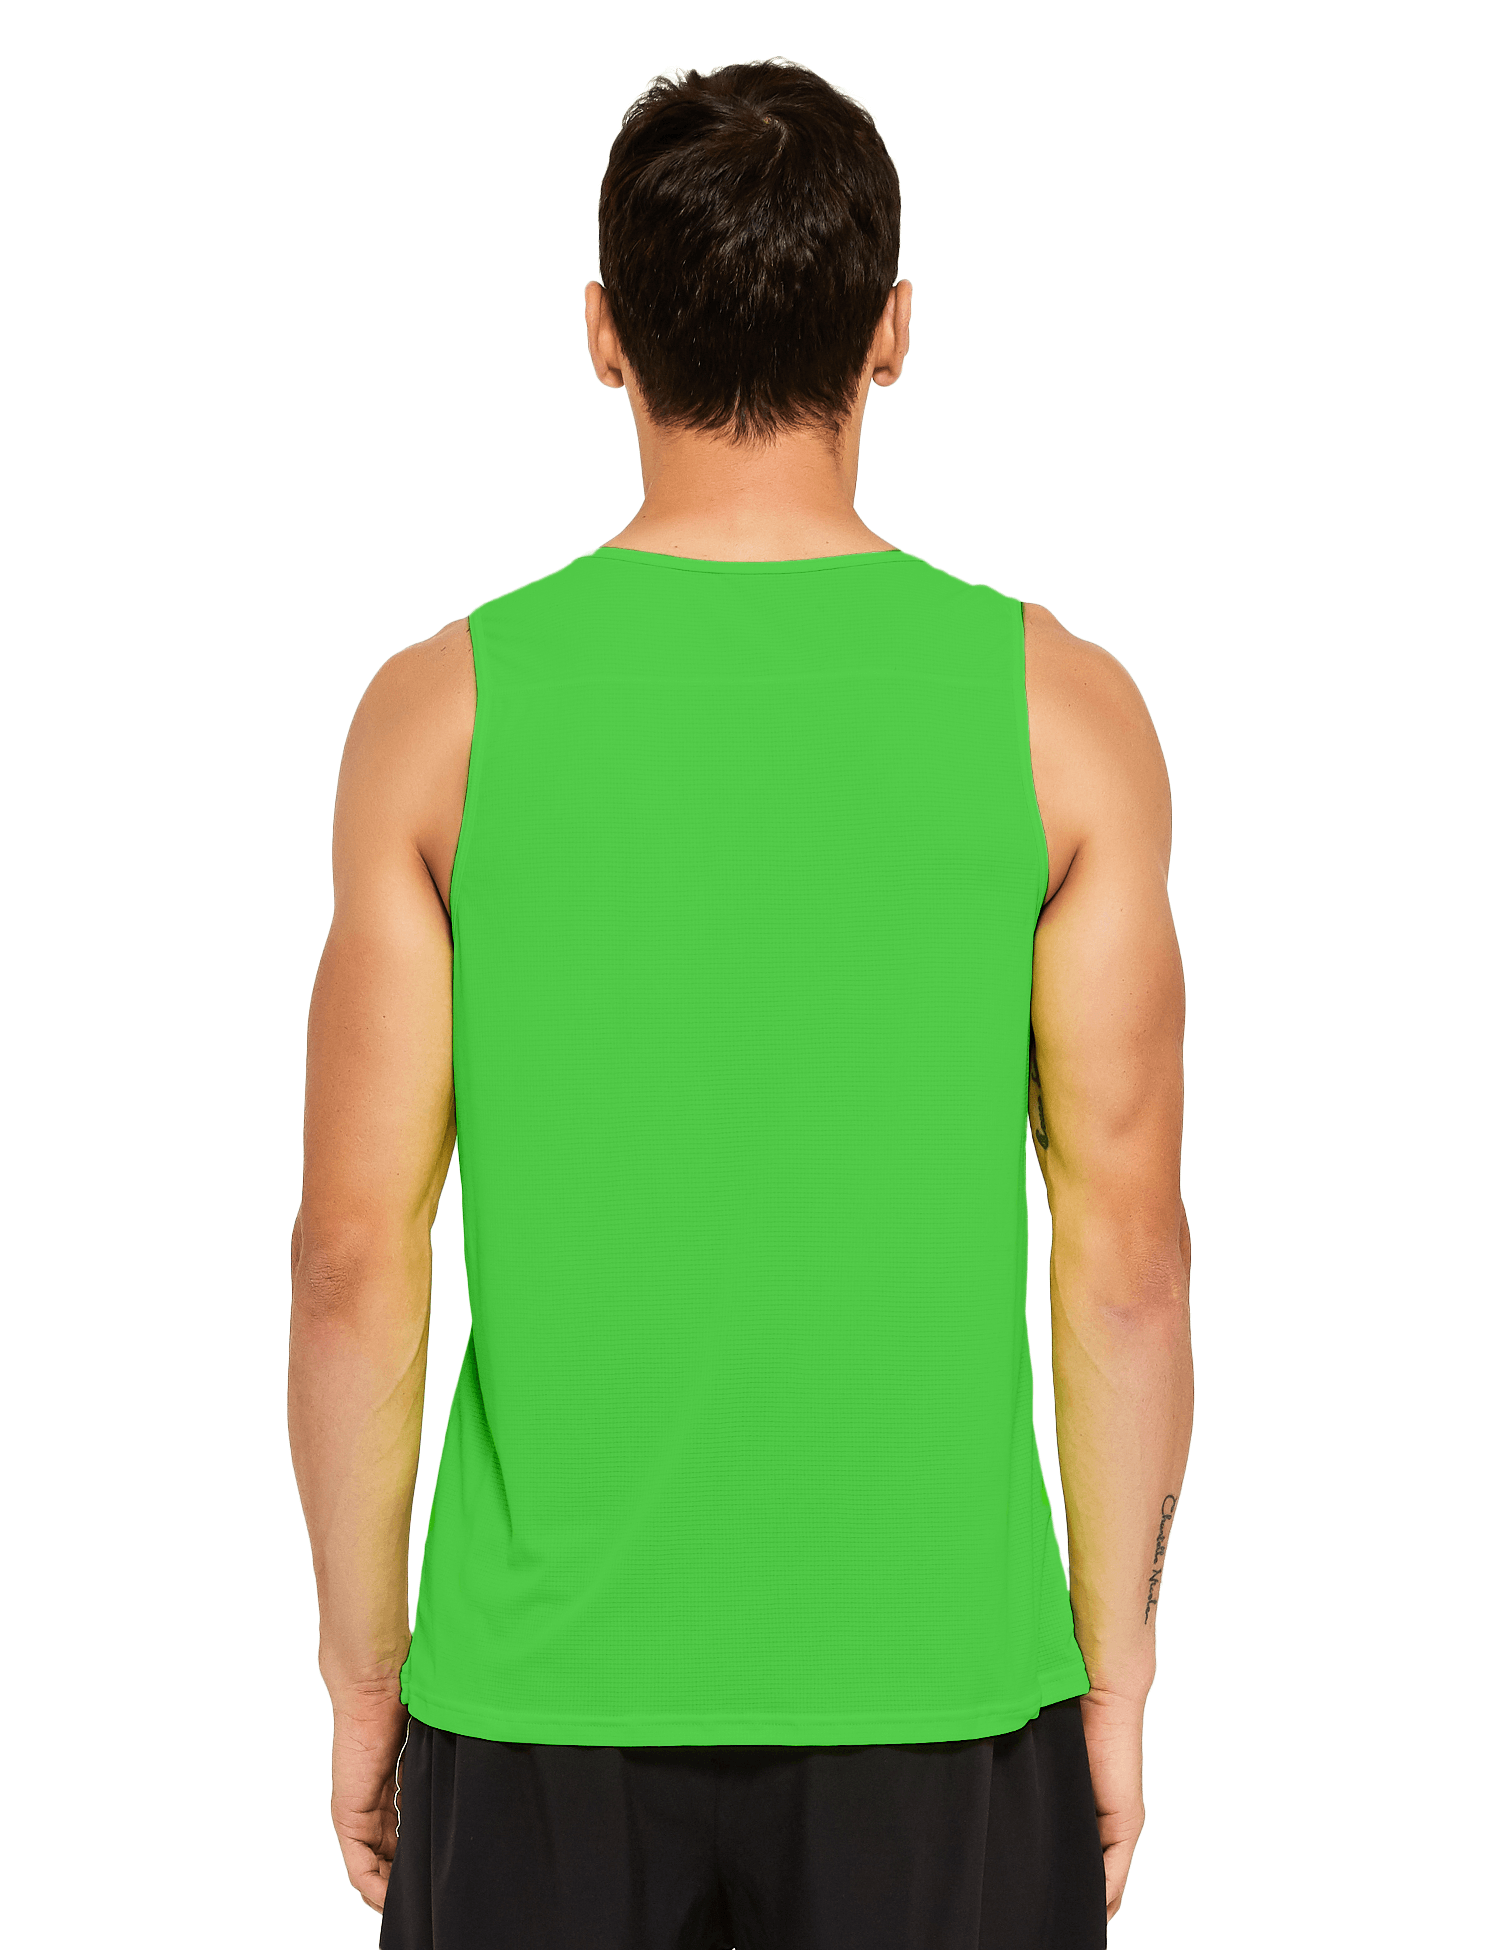 Neon Man Sleeveless Sweatshirt - Ready-to-Wear 1A972J